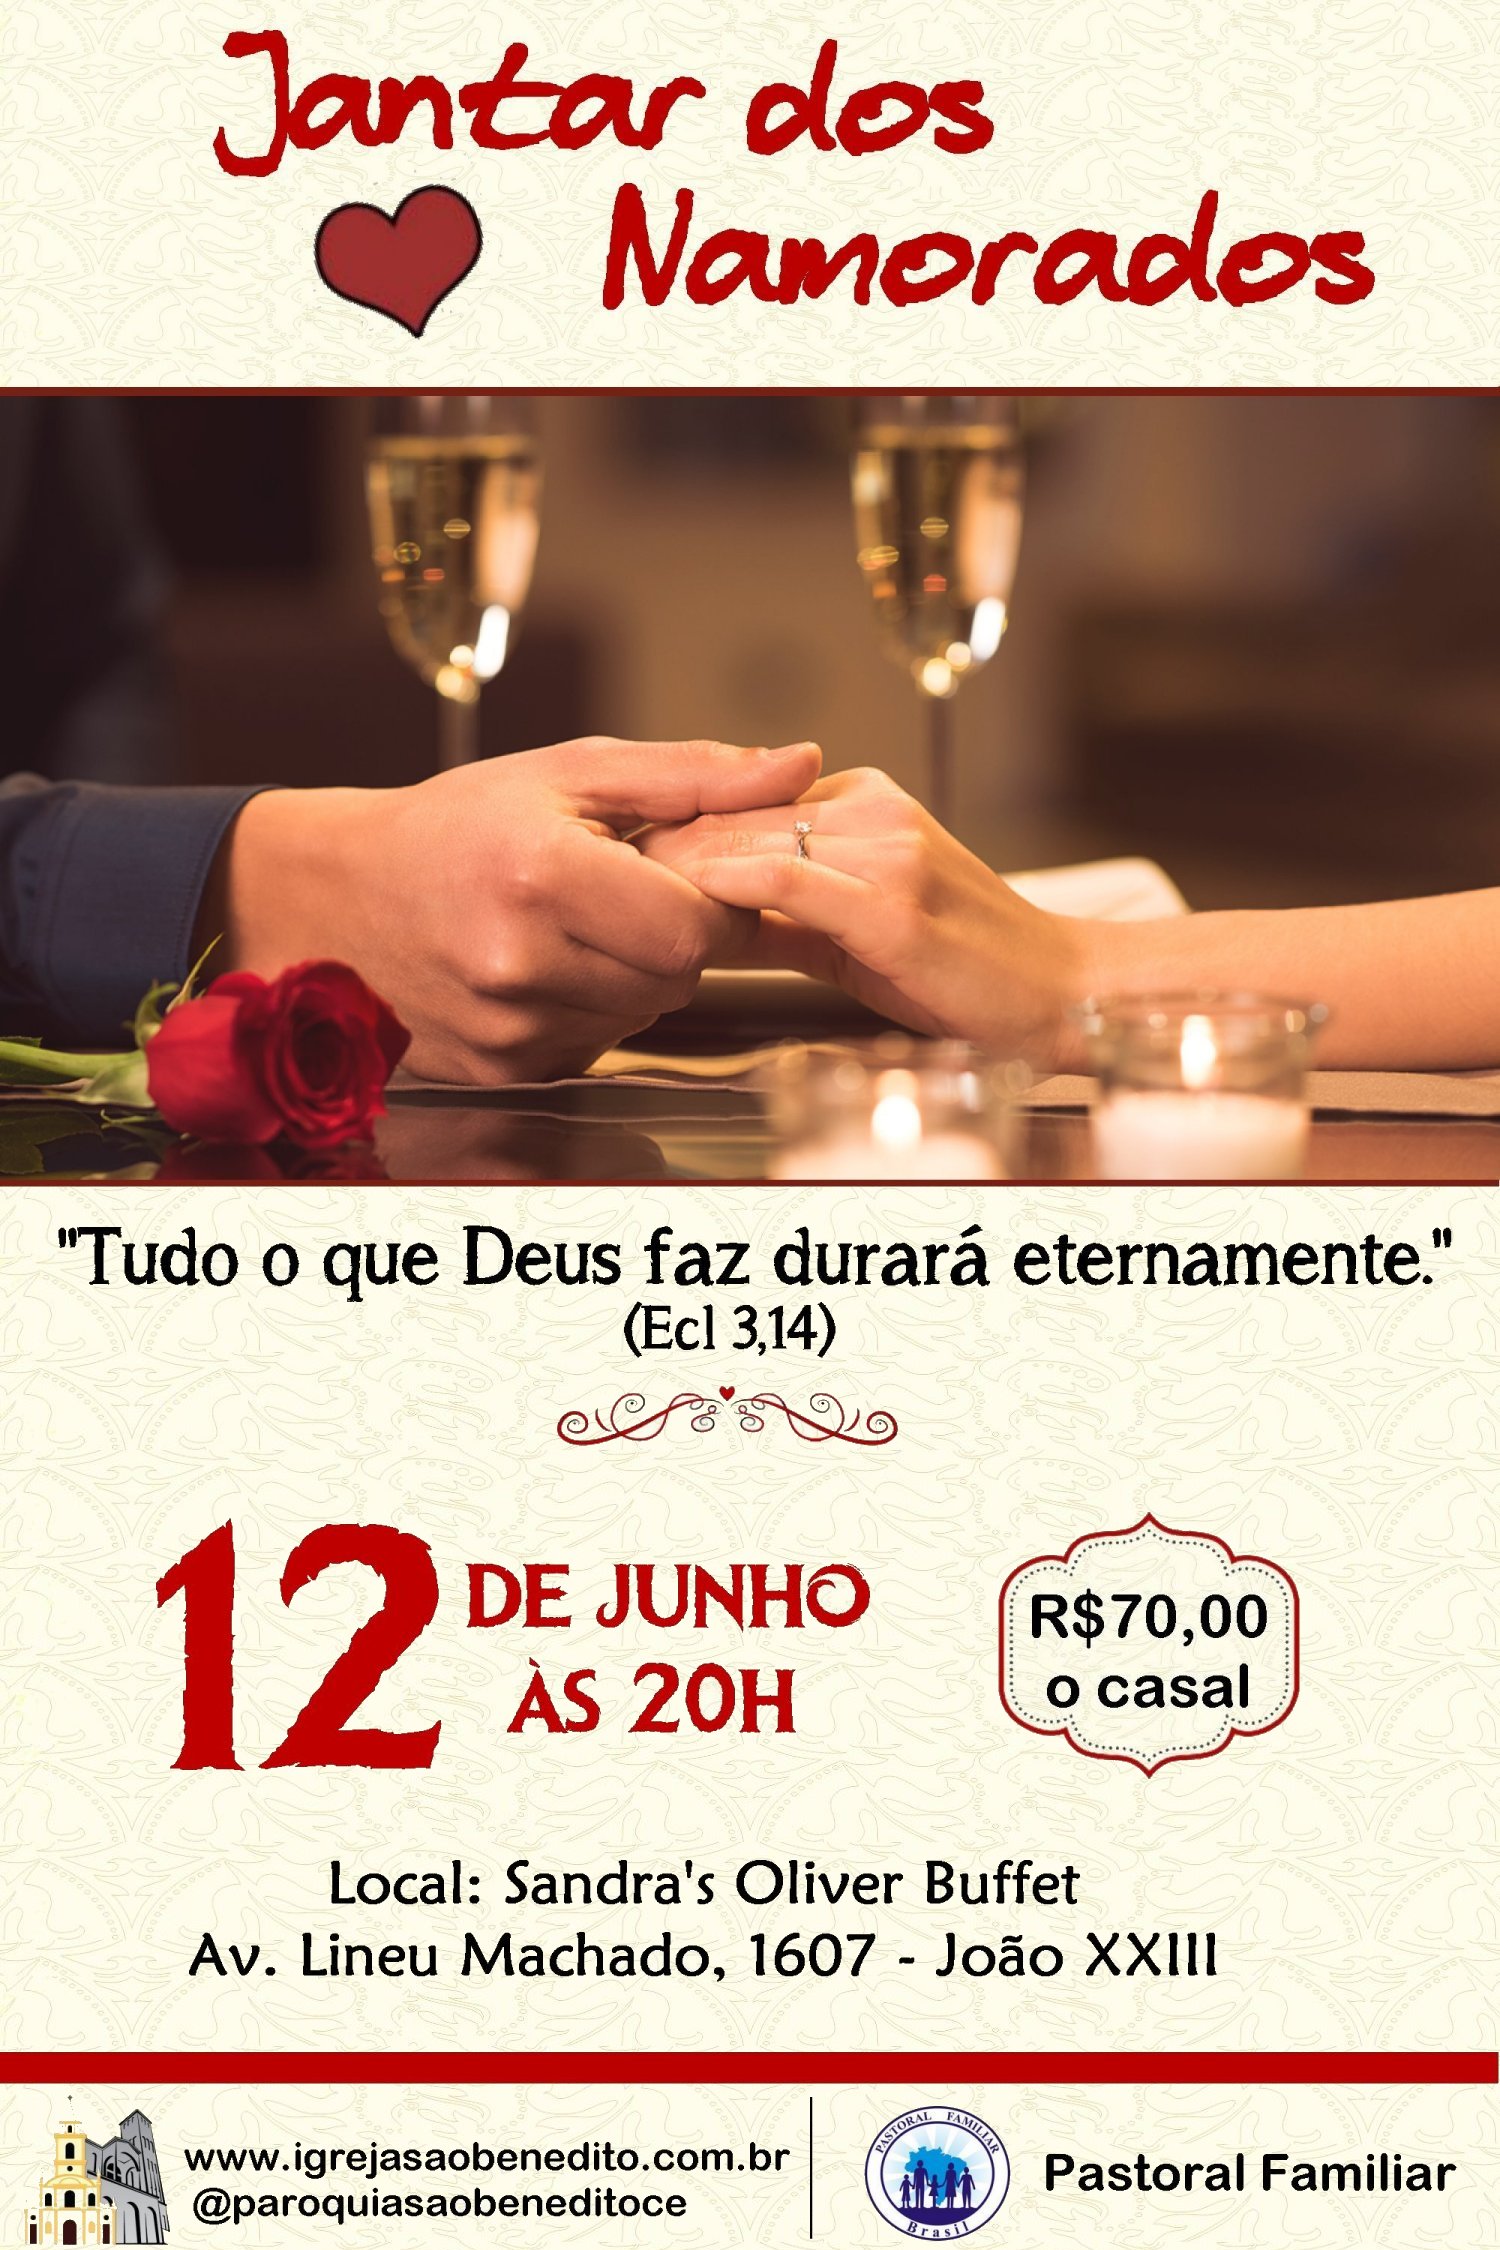 Pastoral Familiar promoverá Jantar dos Namorados dia 12/06